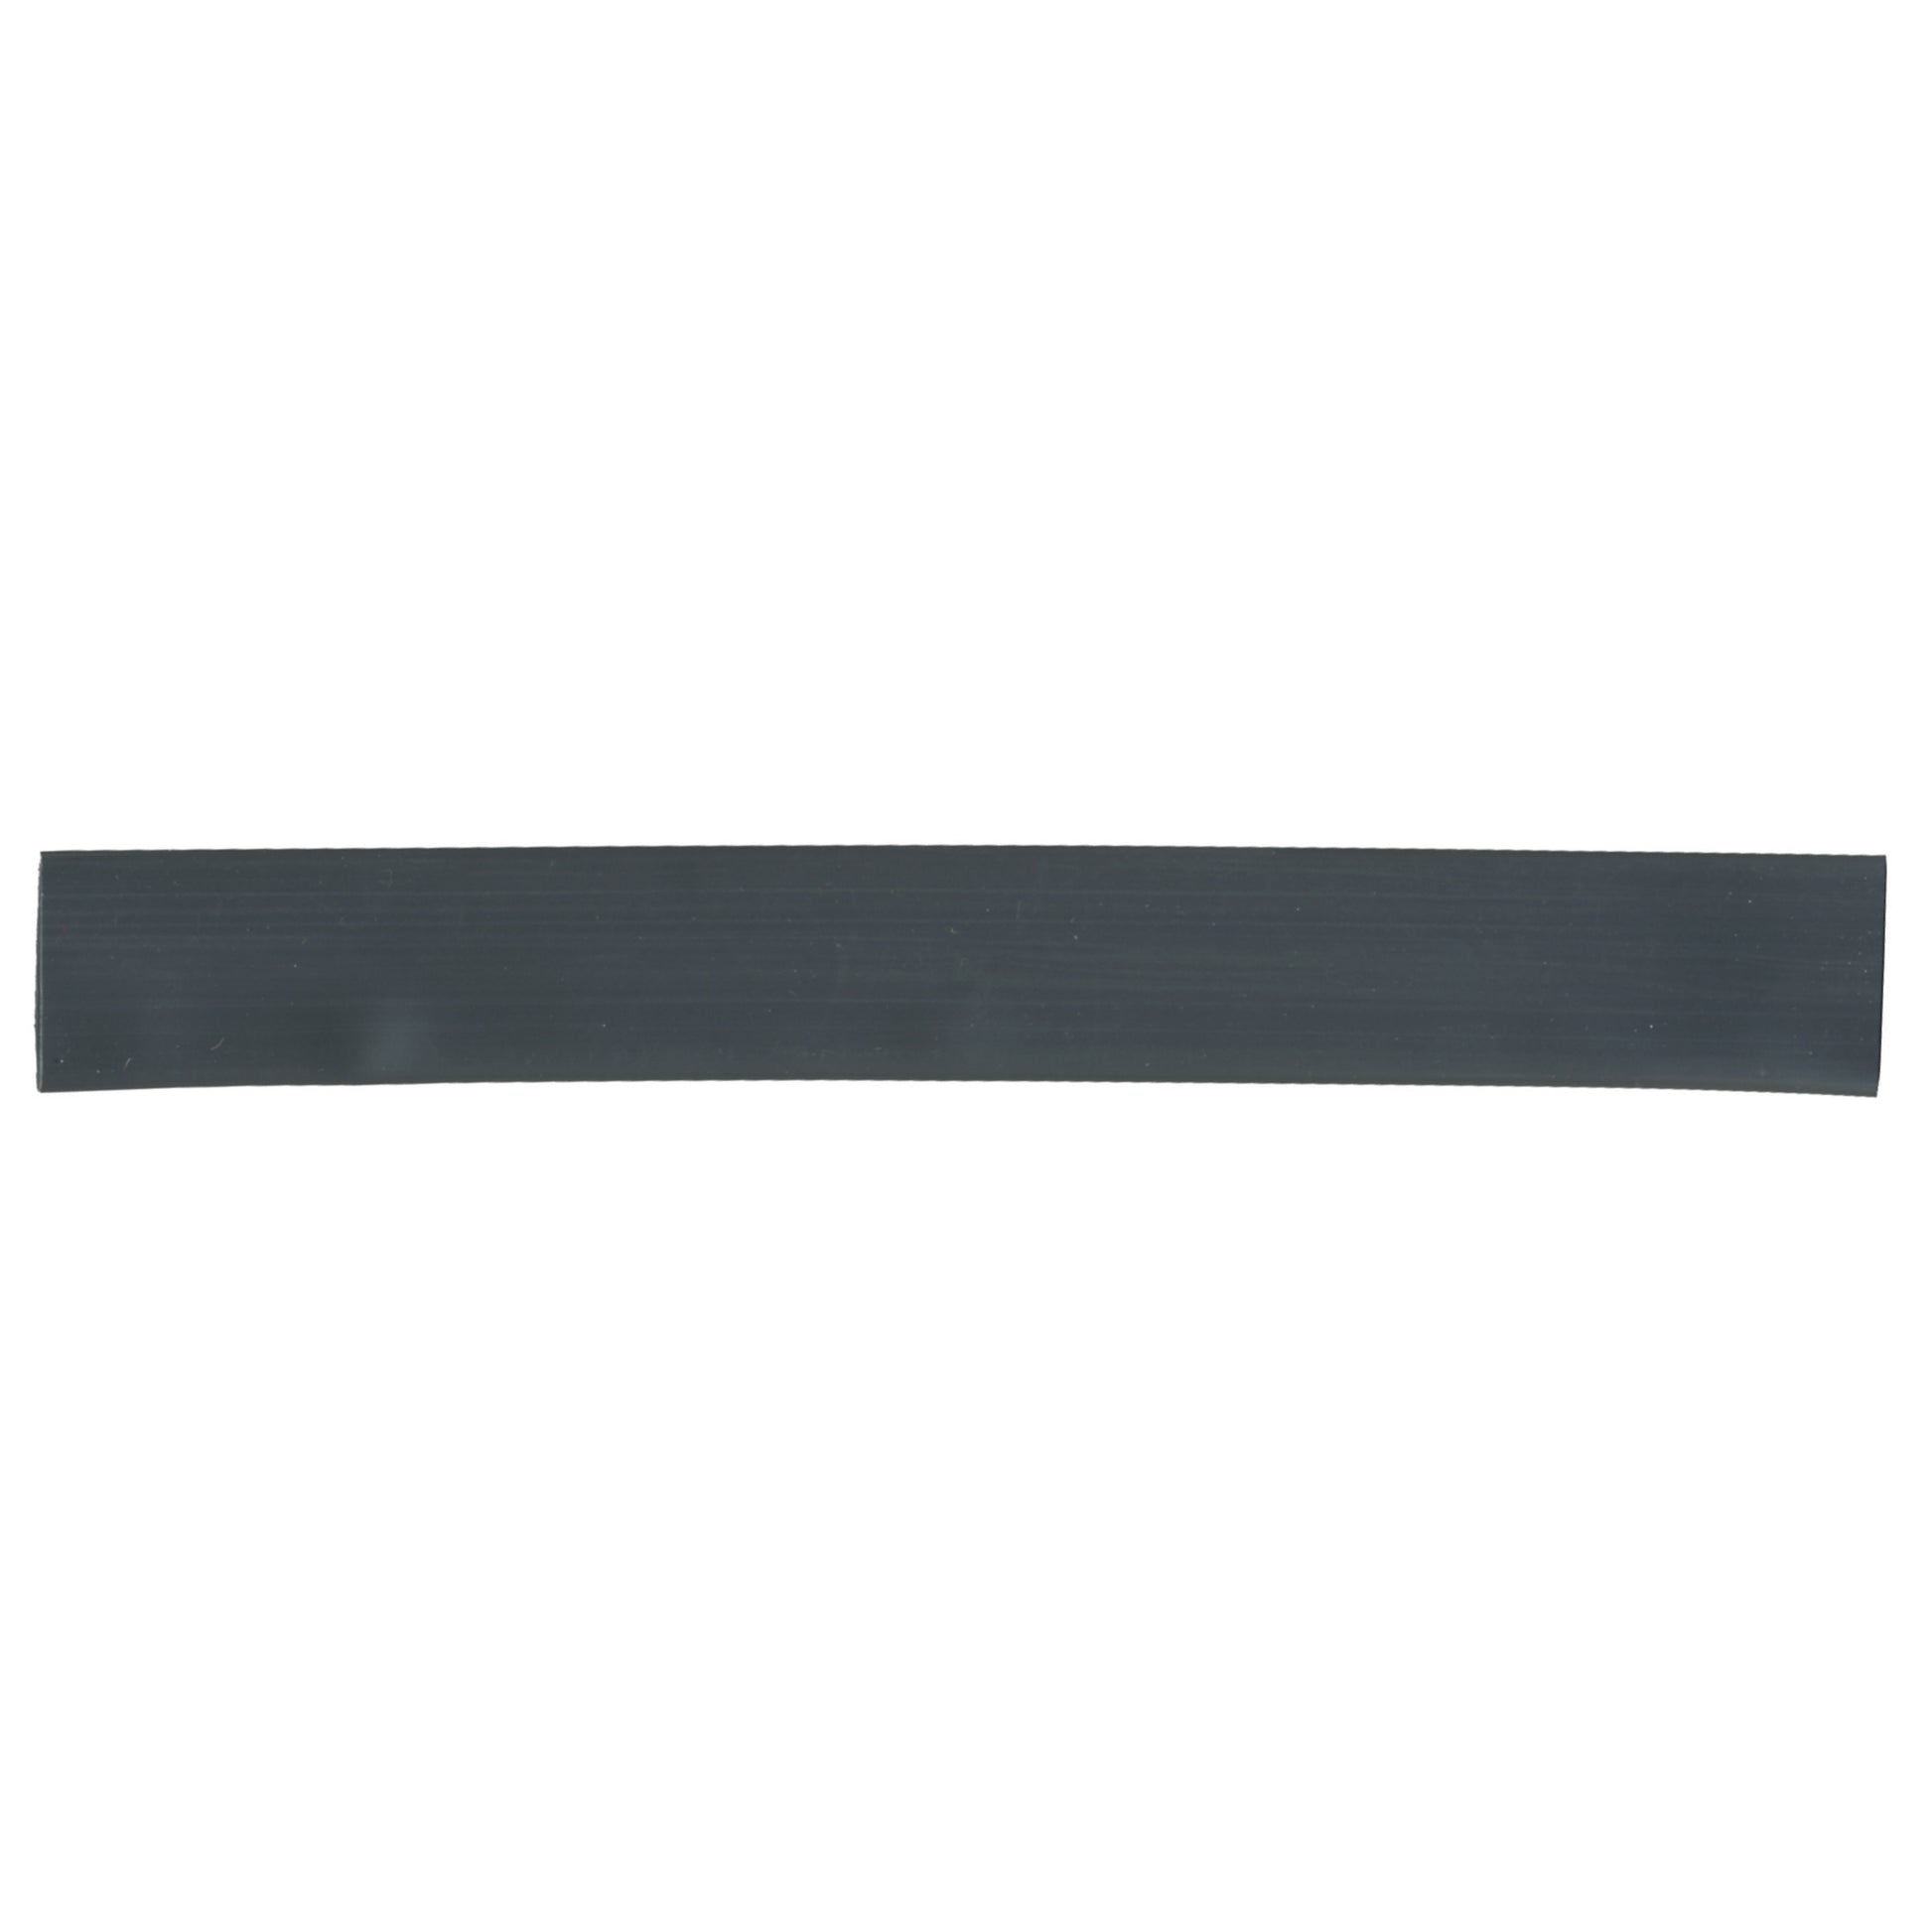 Flexible Thin Single Wall Non-Adhesive Heat Shrink Tubing 2:1 Black 1/2" ID - 48" Inch 4 Pack